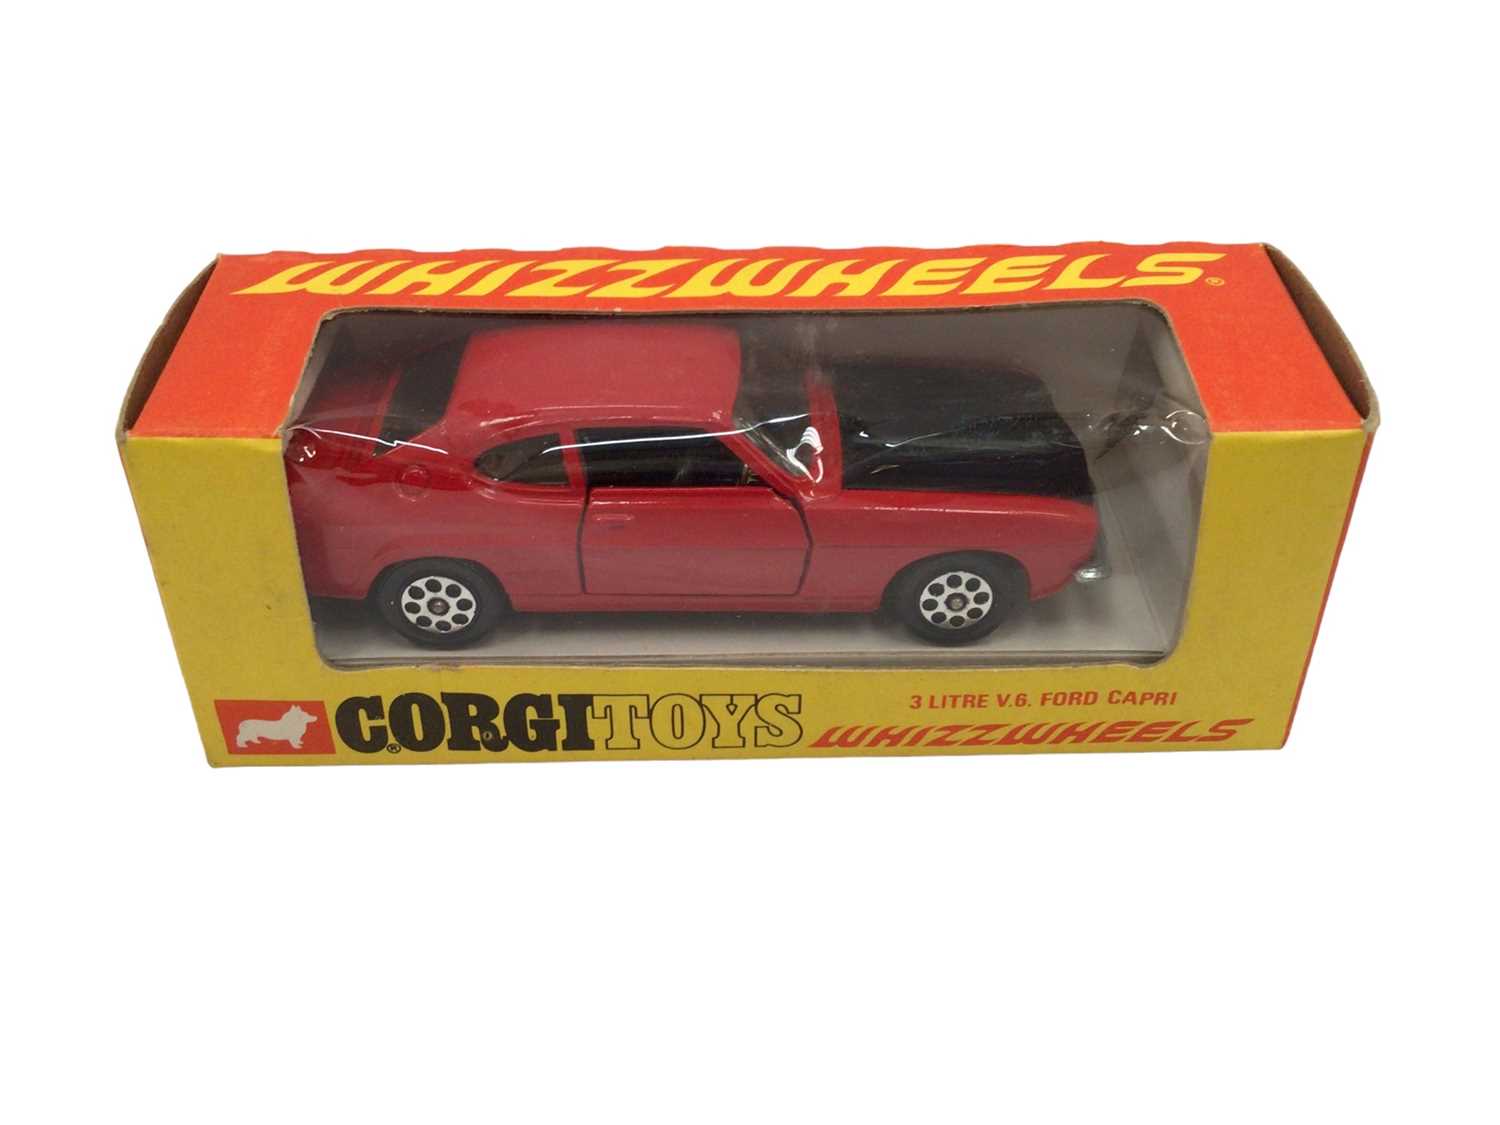 Corgi Volkswagon 'Toblerone' van No. 441 Ford Thames 'Airborne' caravan No. 420, Corgi Whizzwheels F - Image 4 of 4